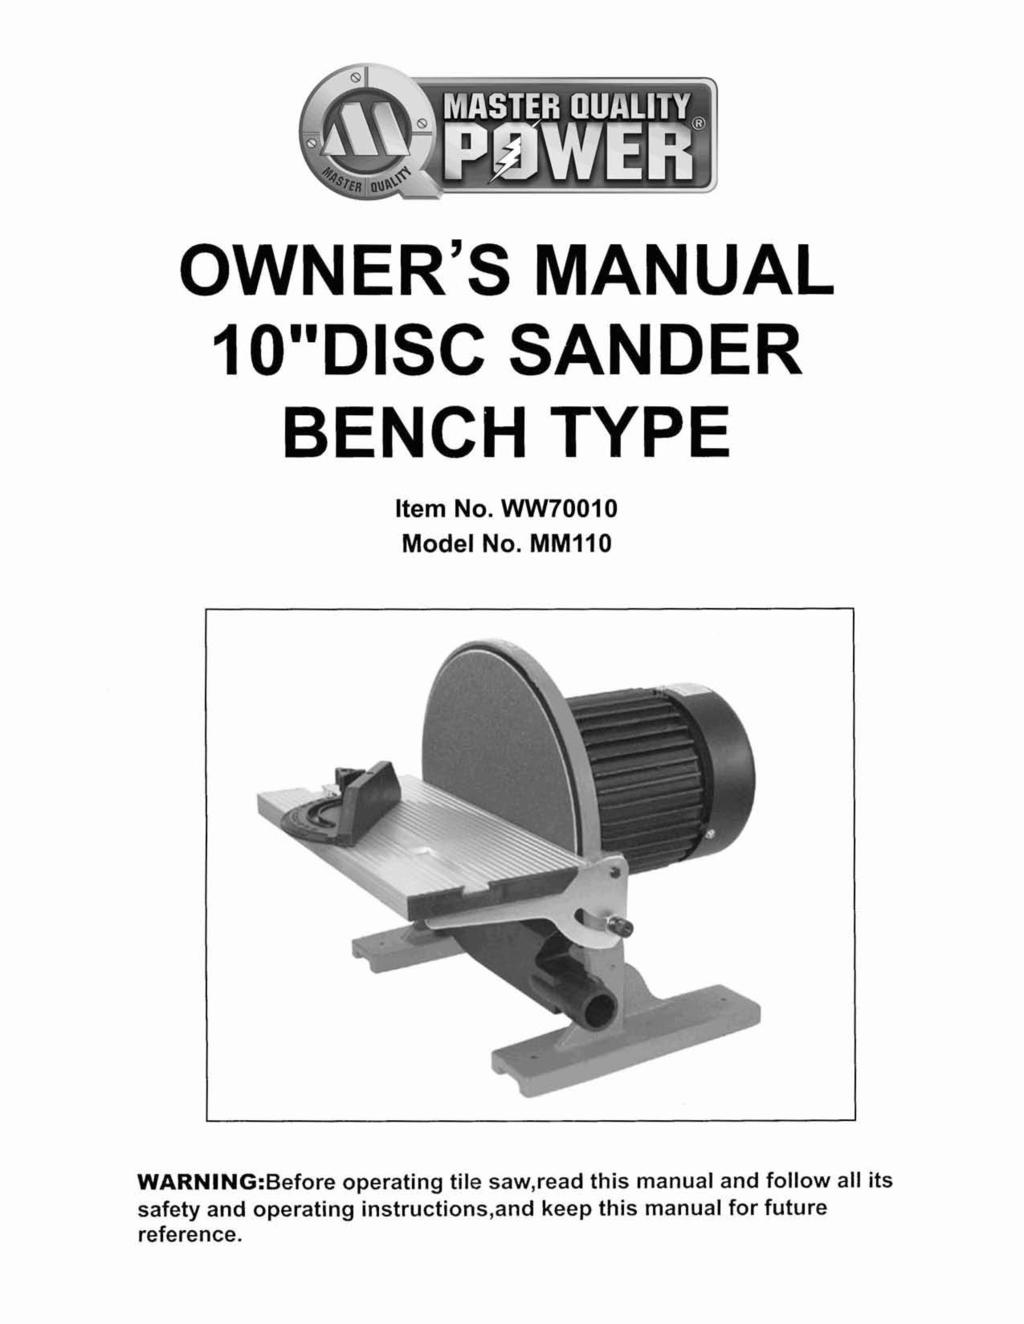 OWNER'S MANUAL 1OWDISC SANDER BENCH TYPE Item No. VW70010 Model No. MMIIO WARN!